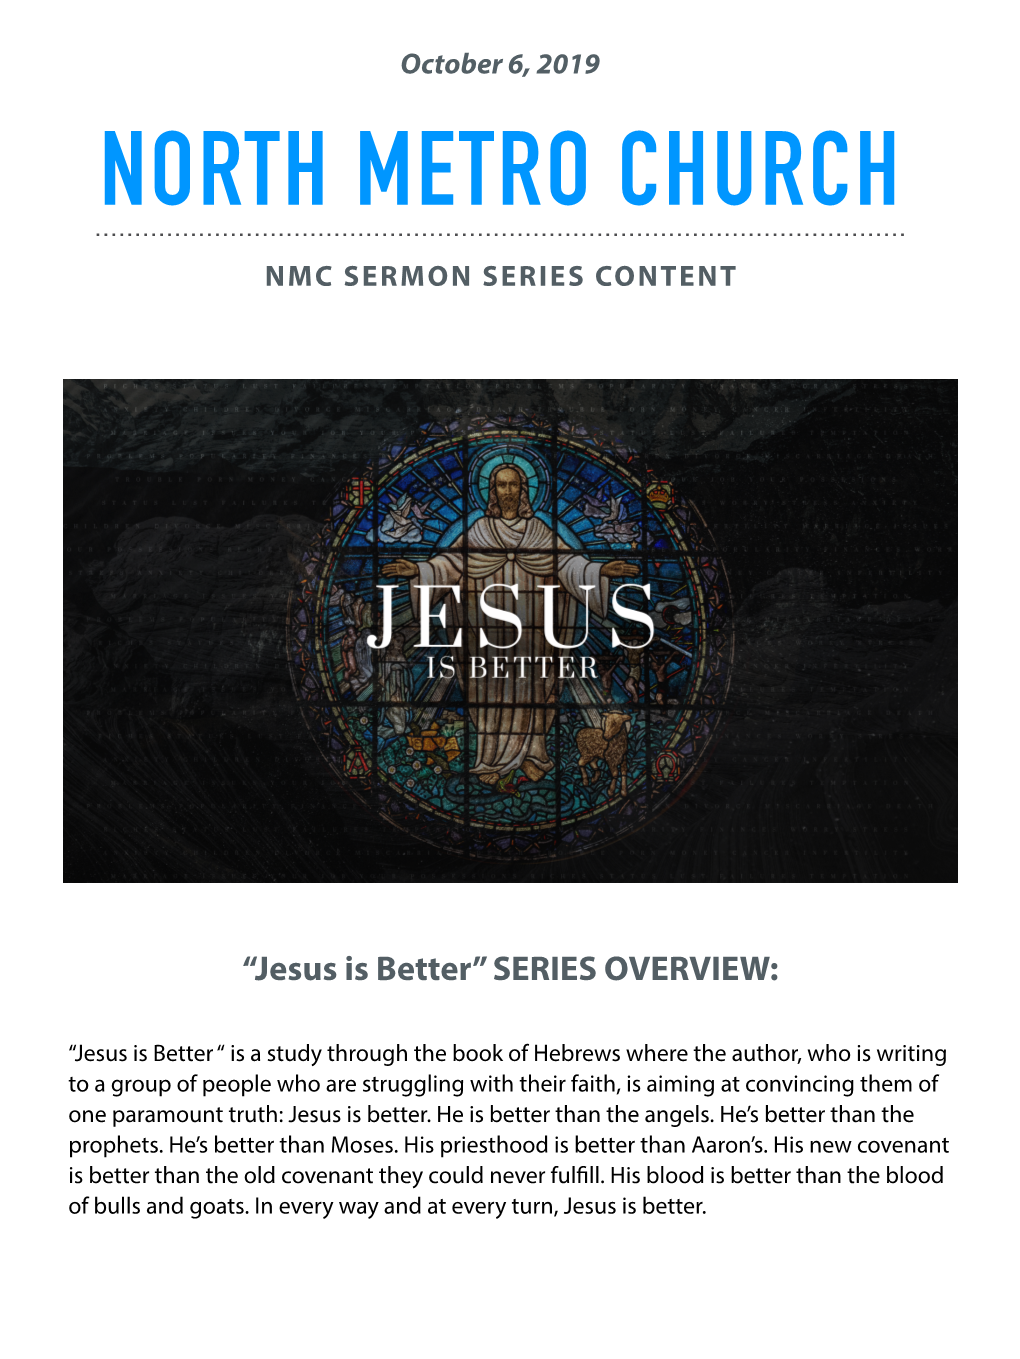 Jesusisbetterweek5 Web Version